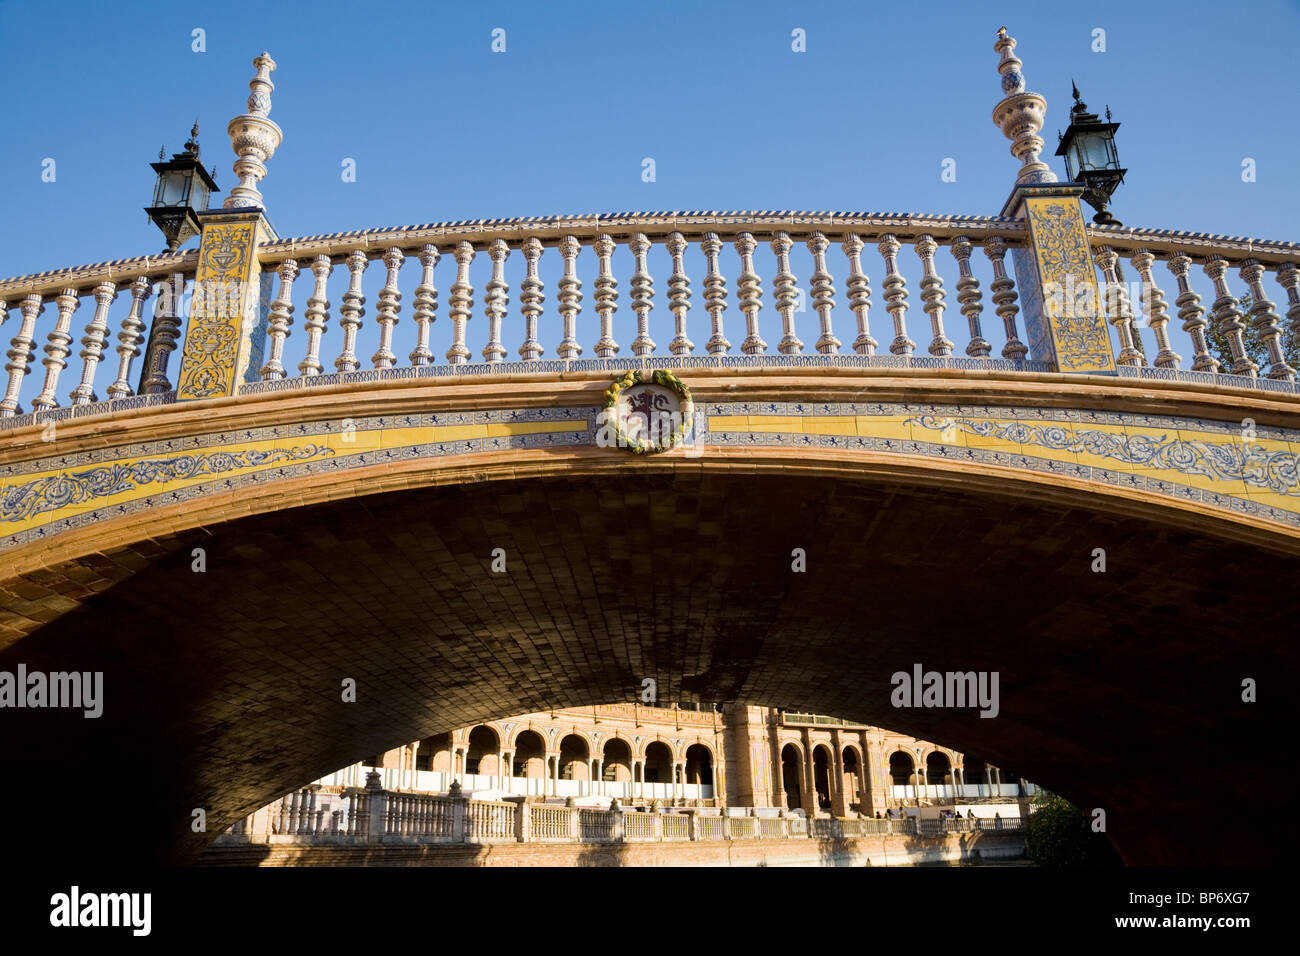 A bridge crossing / crosses over the moat of Seville's Plaza de España de Sevilla. Seville, Spain. On a sunny day with blue sky. Stock Photo